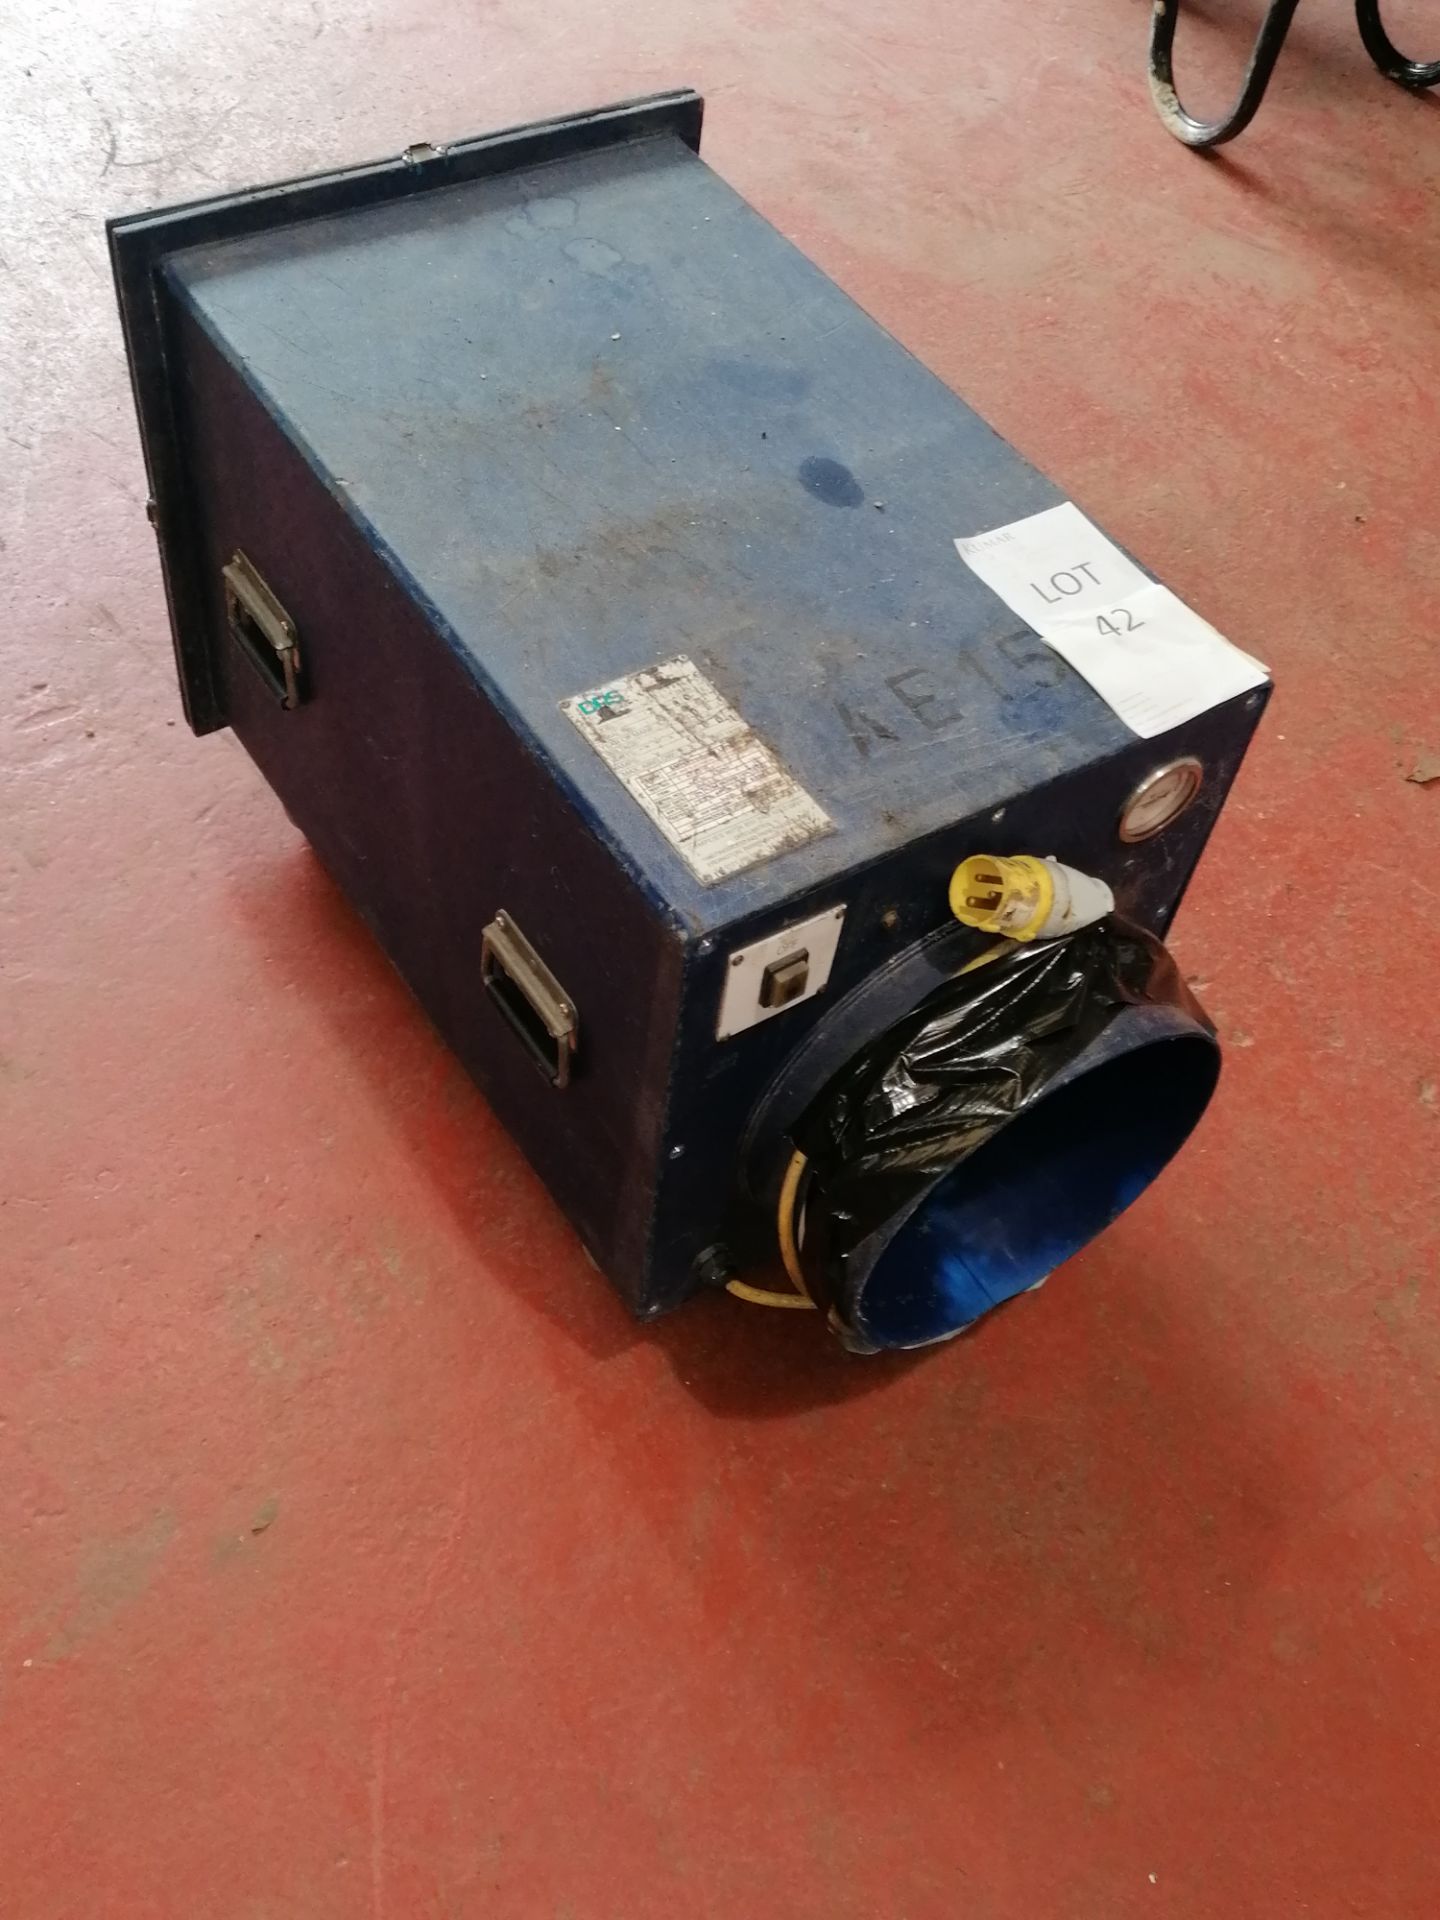 DR5 PNU 2300 Extractor/Filter Unit 110V, Serial No. 1286, (2006) - Image 2 of 6